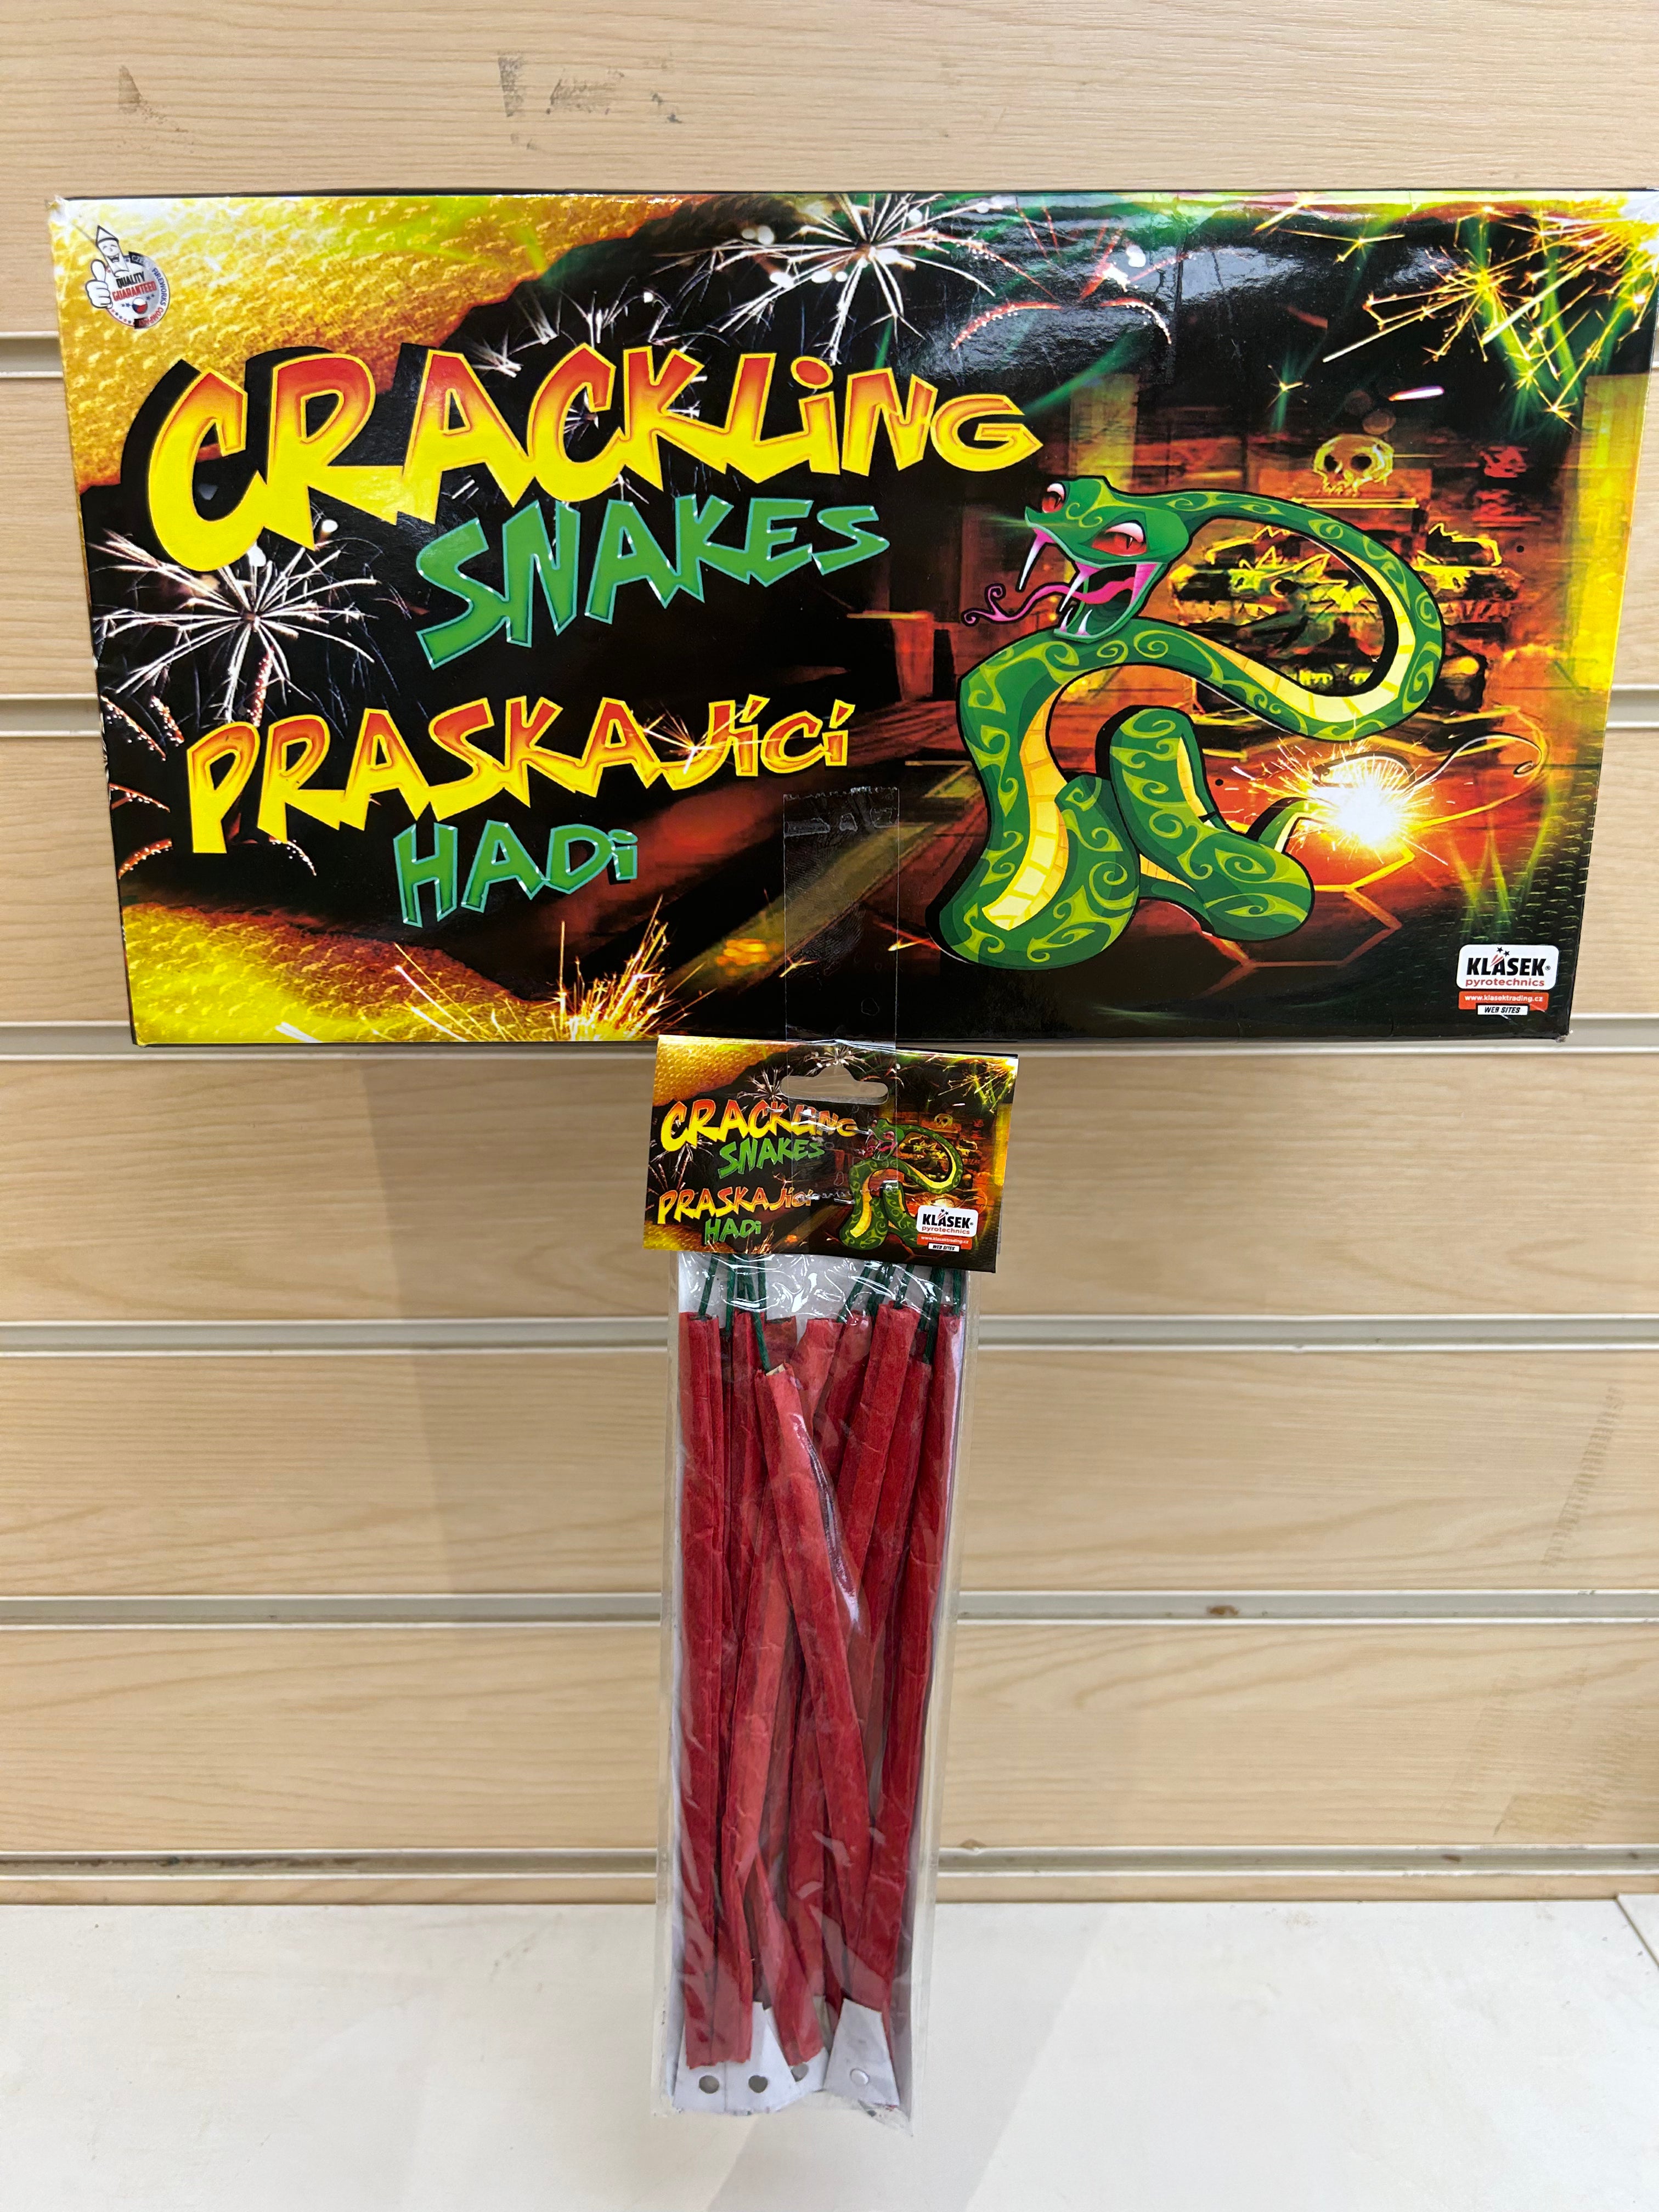 Crackling Snakes . Novelty firework